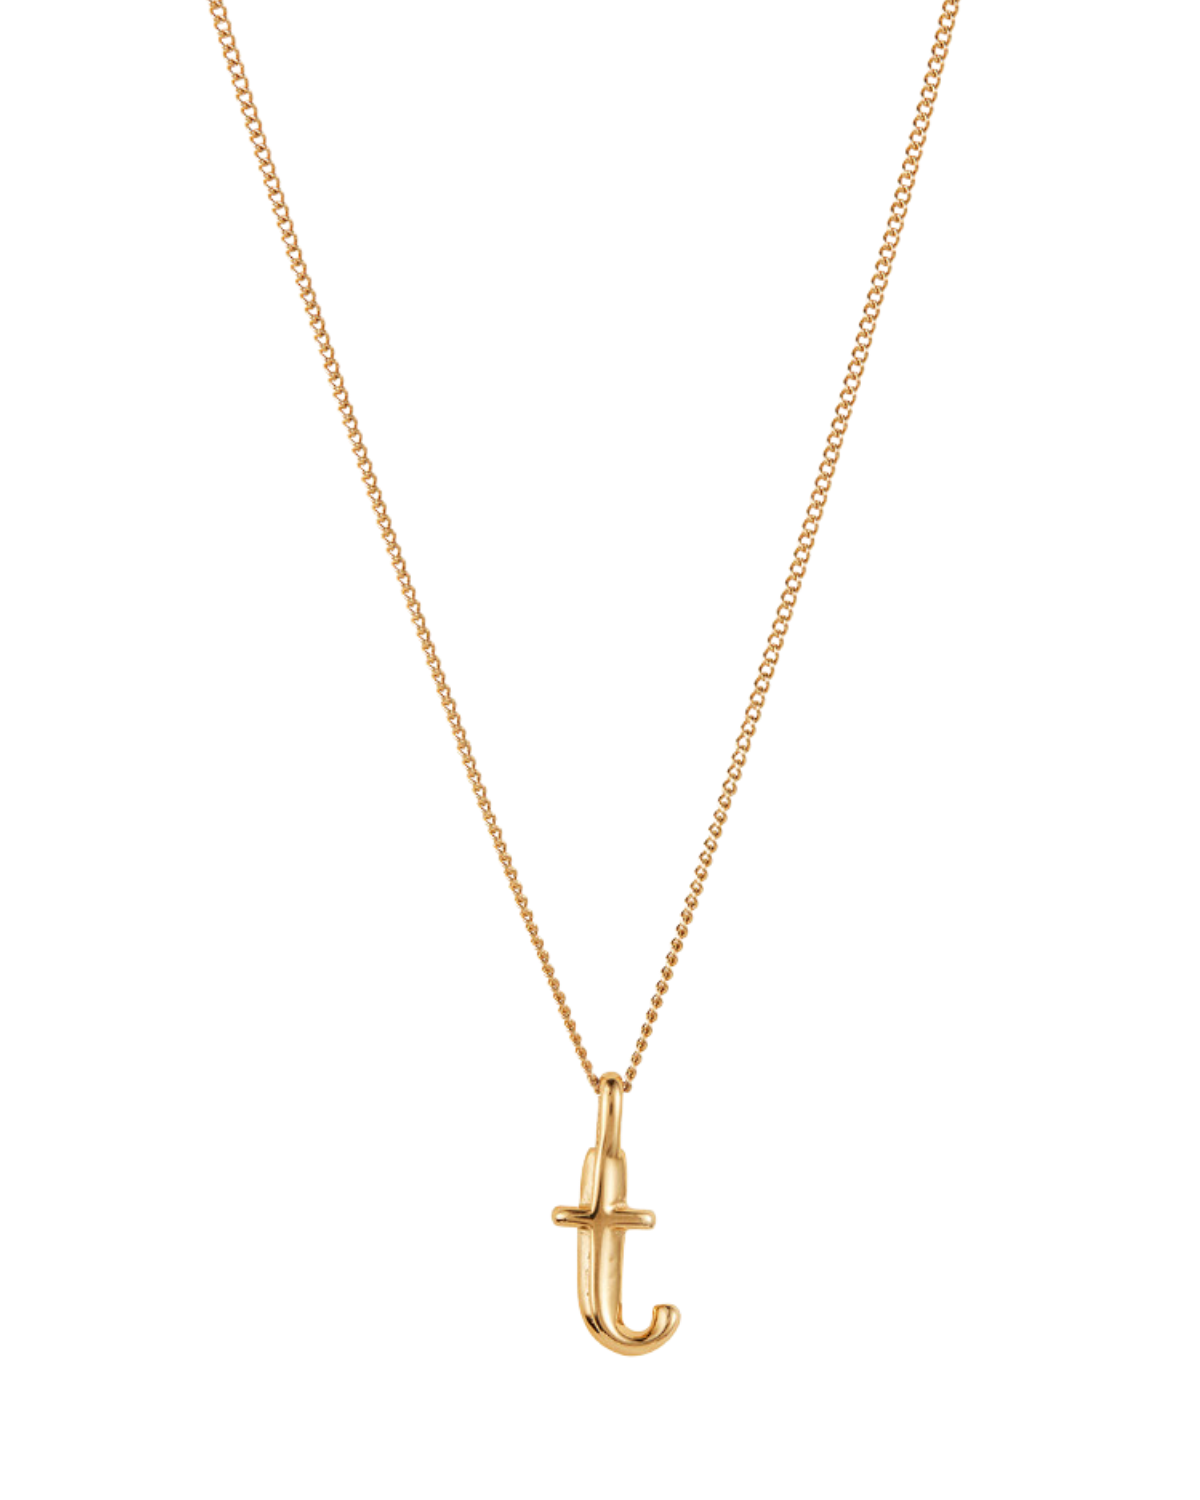 Monogram Necklace - T (Gold)